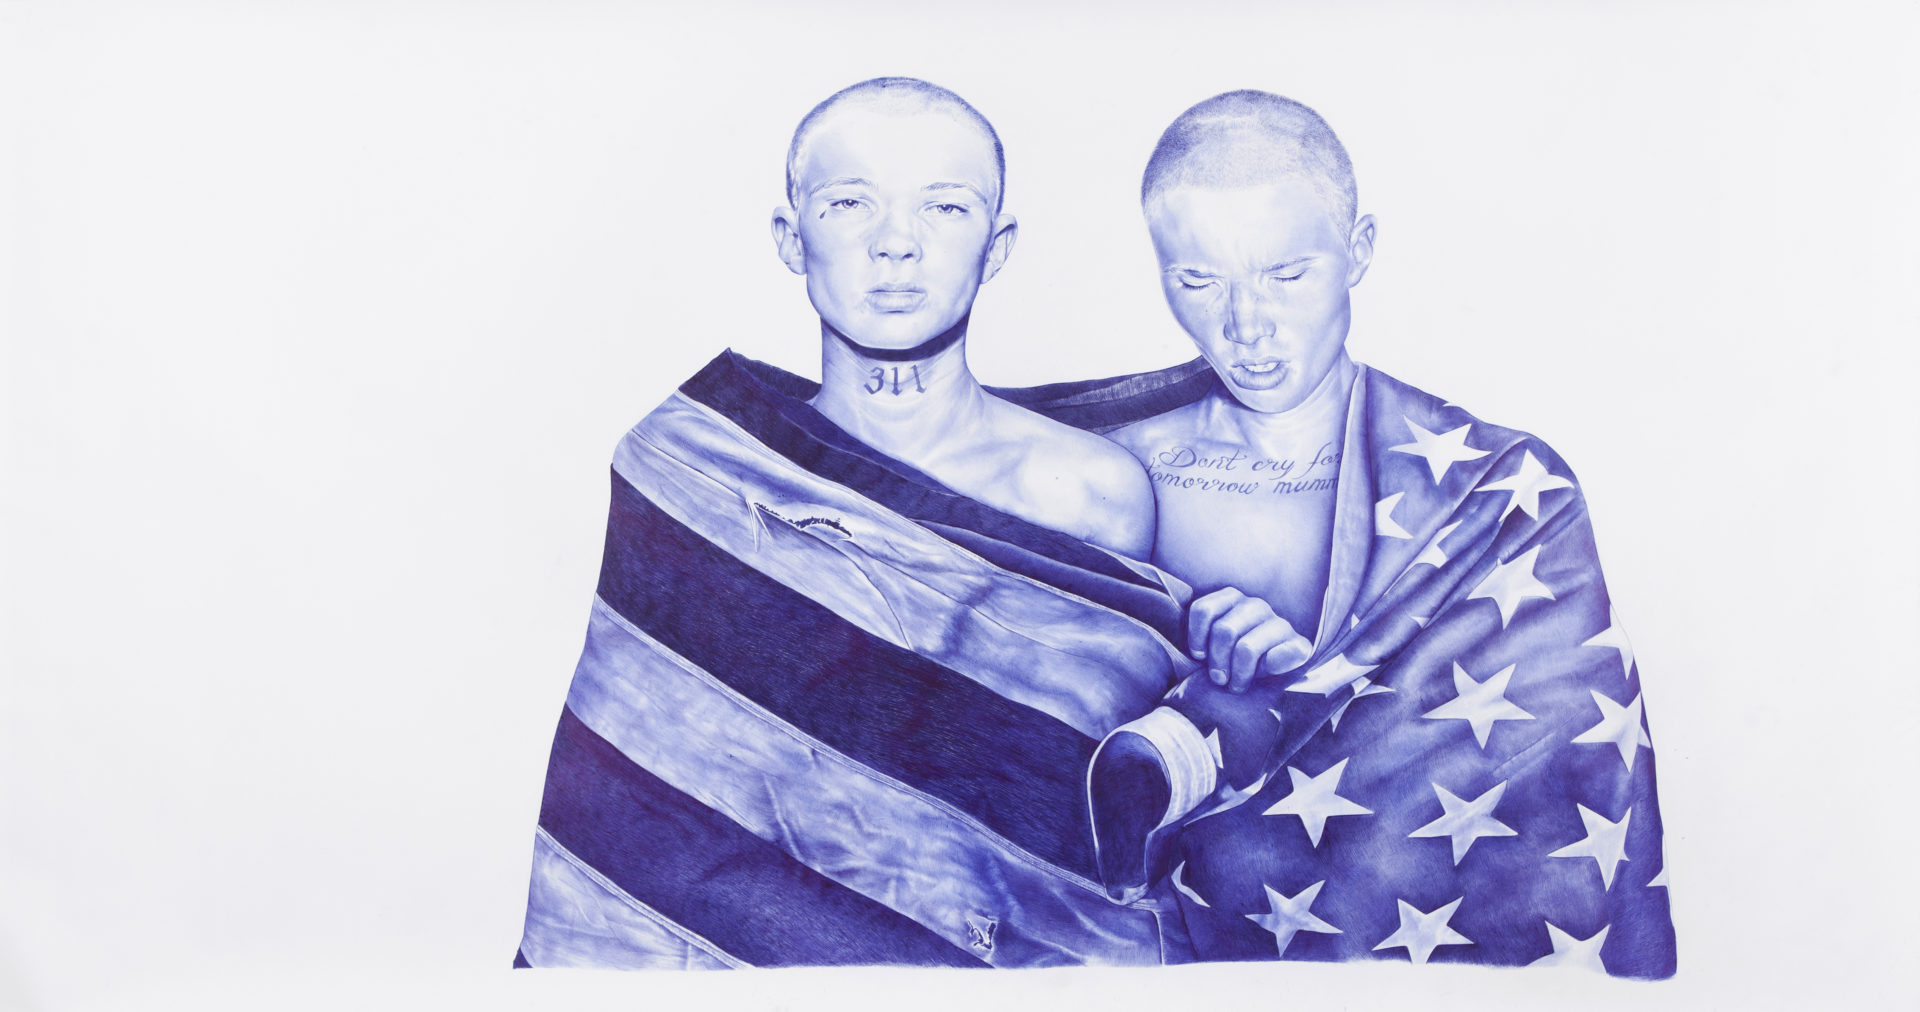 Bryan & David, stylo bic sur papier, 190 x 300 cm, 2013, Collection privée